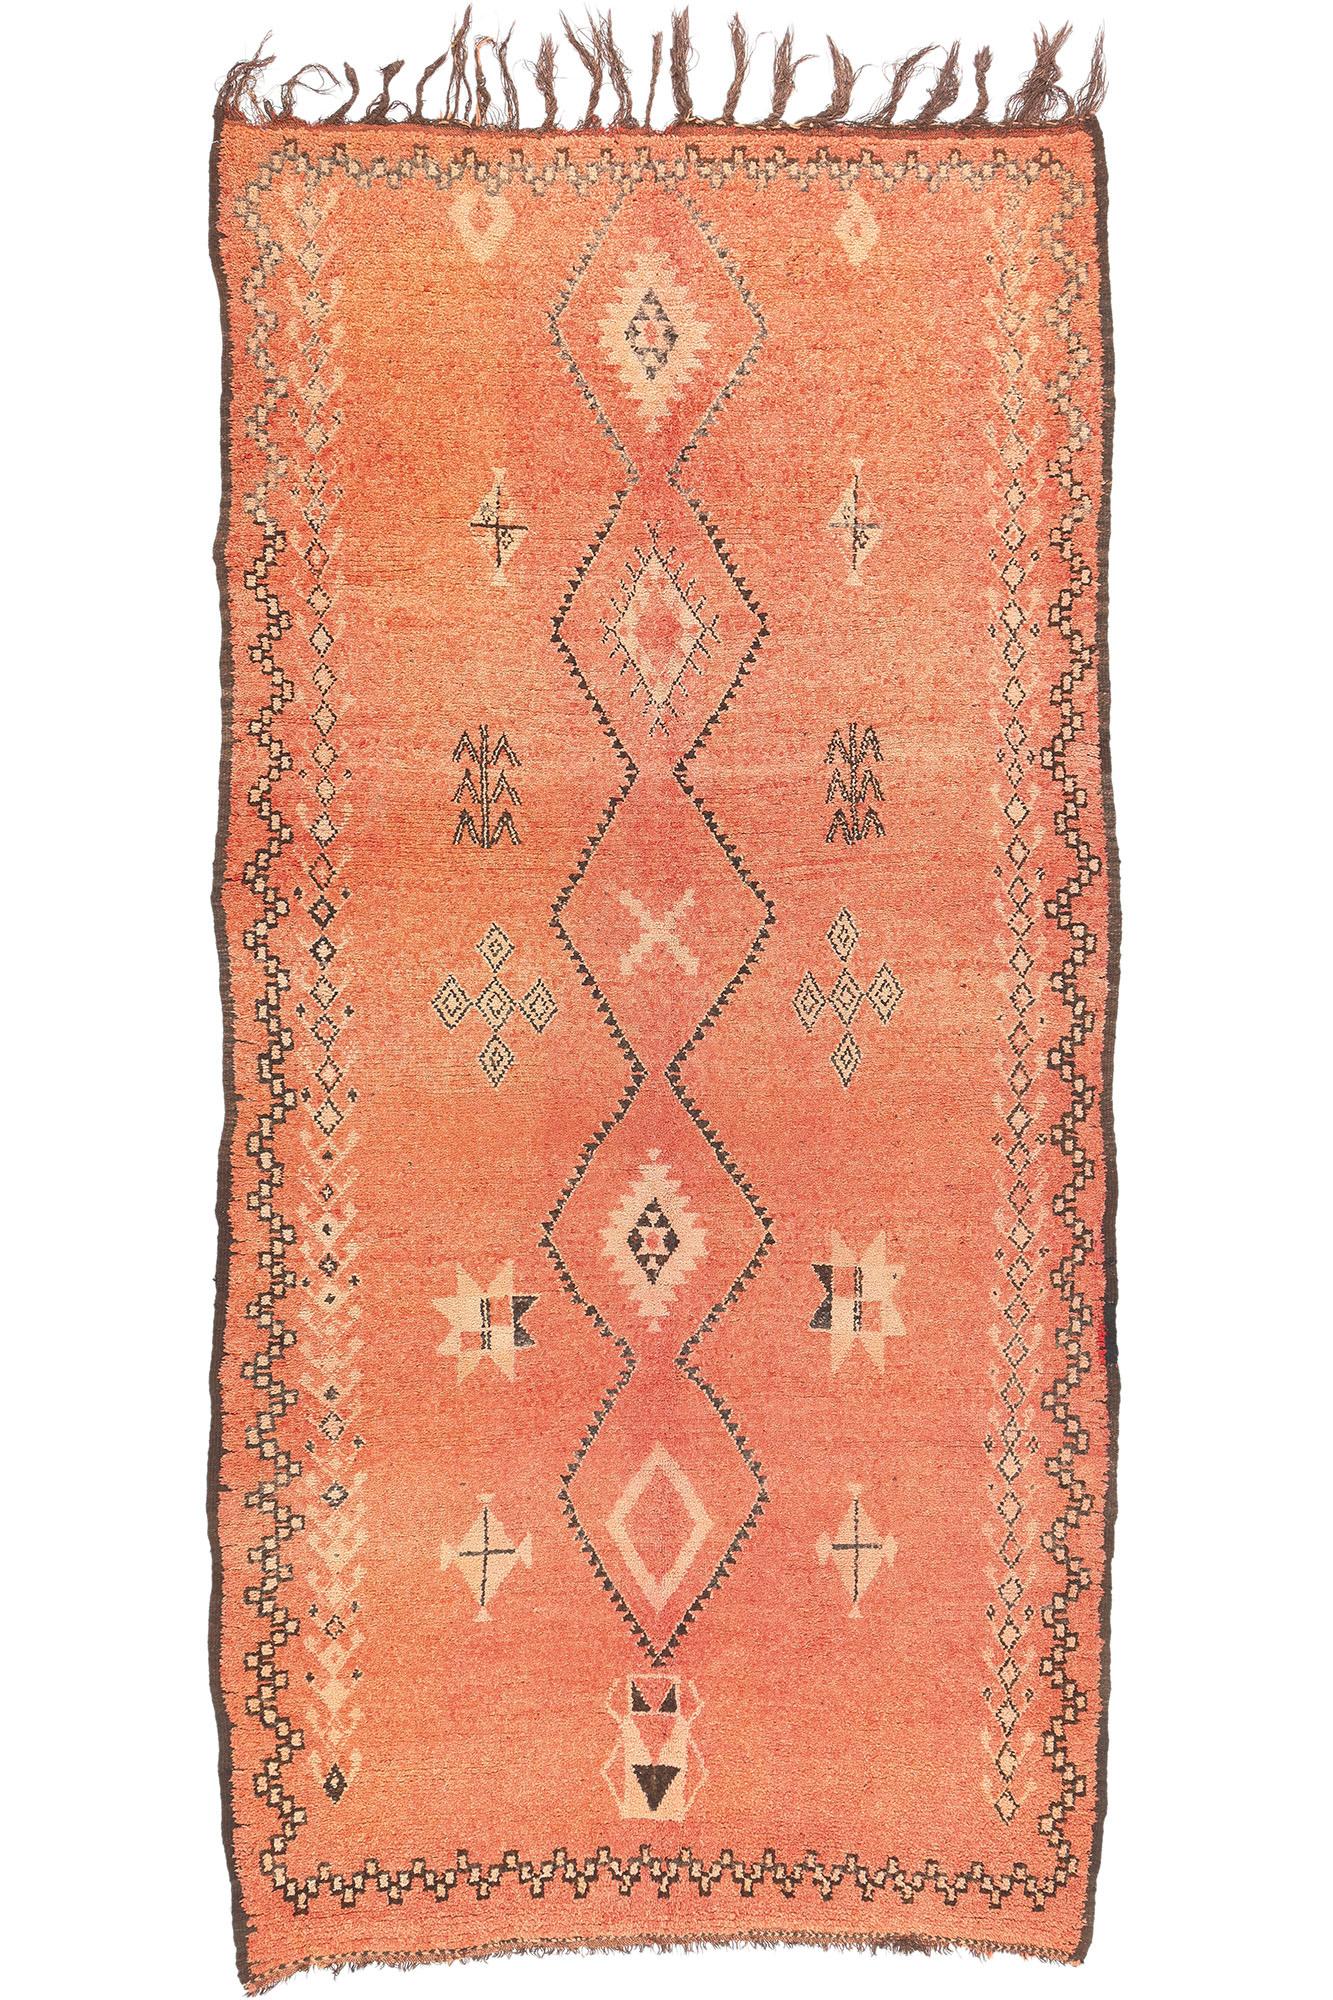 Vintage Taznakht Moroccan Rug, Southwest Desert Style Meets Tribal Enchantment